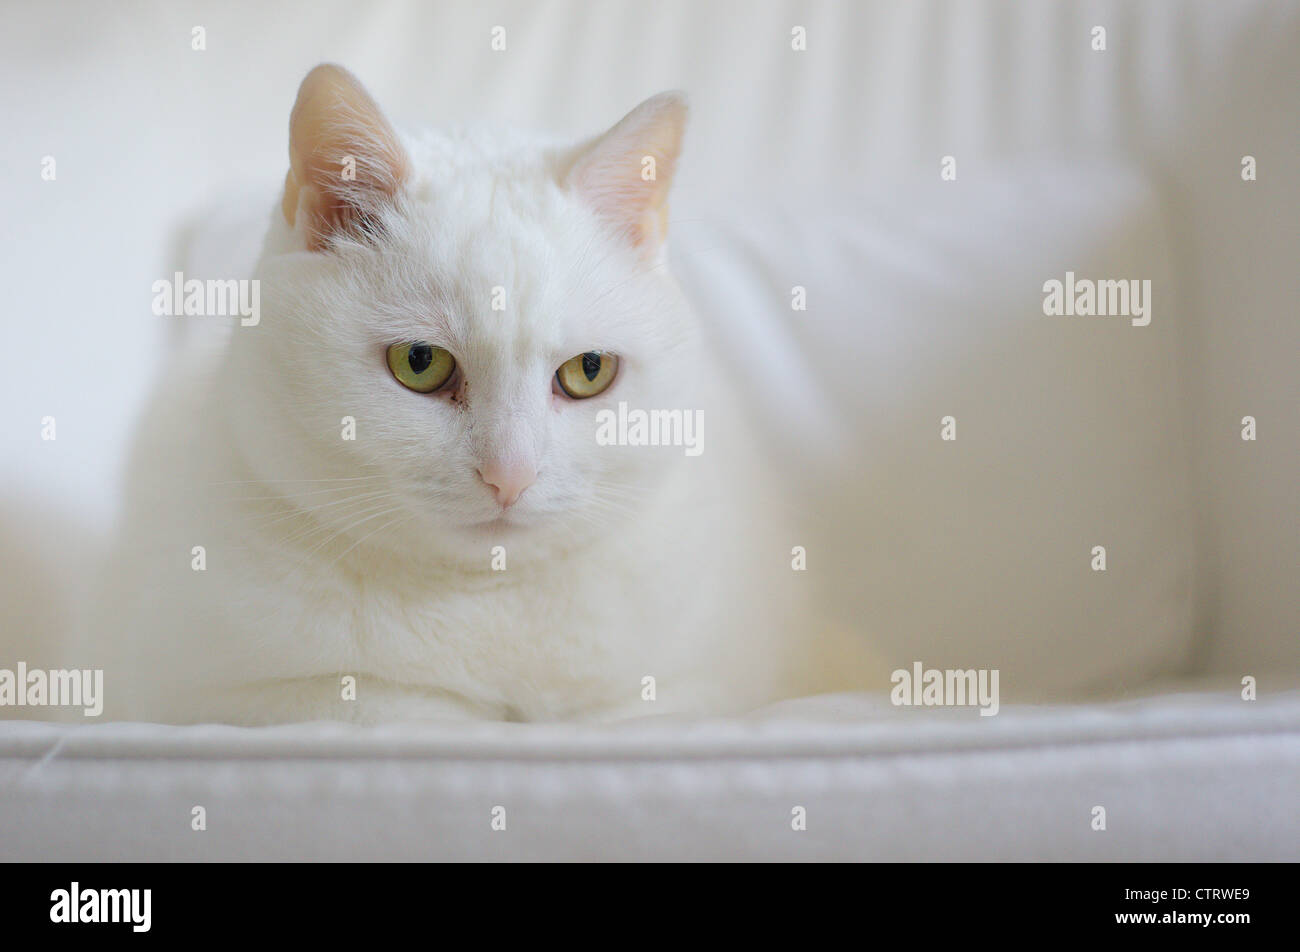 White cat sitting on the white armchair Stock Photo